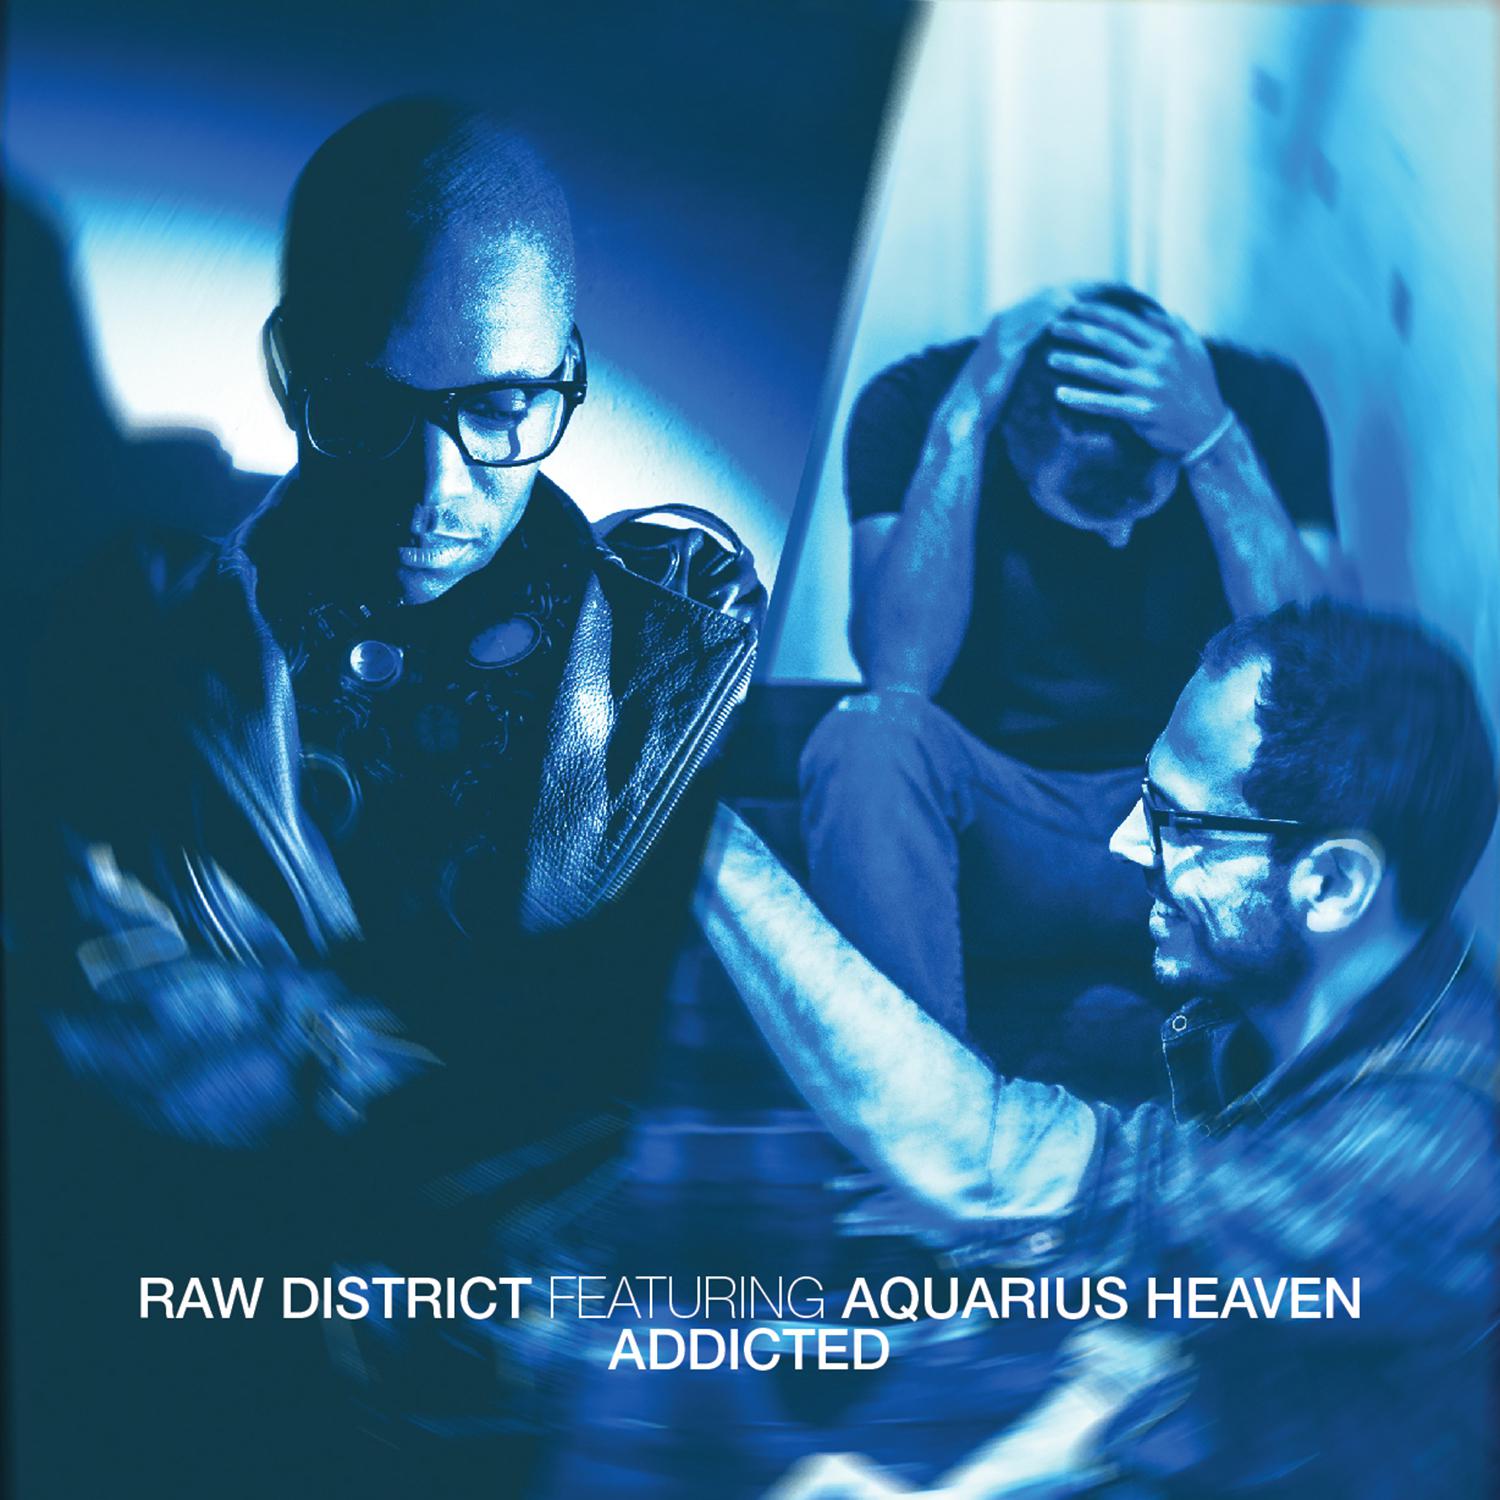 Addicted (Doc Martin Sublevel Live Remix)